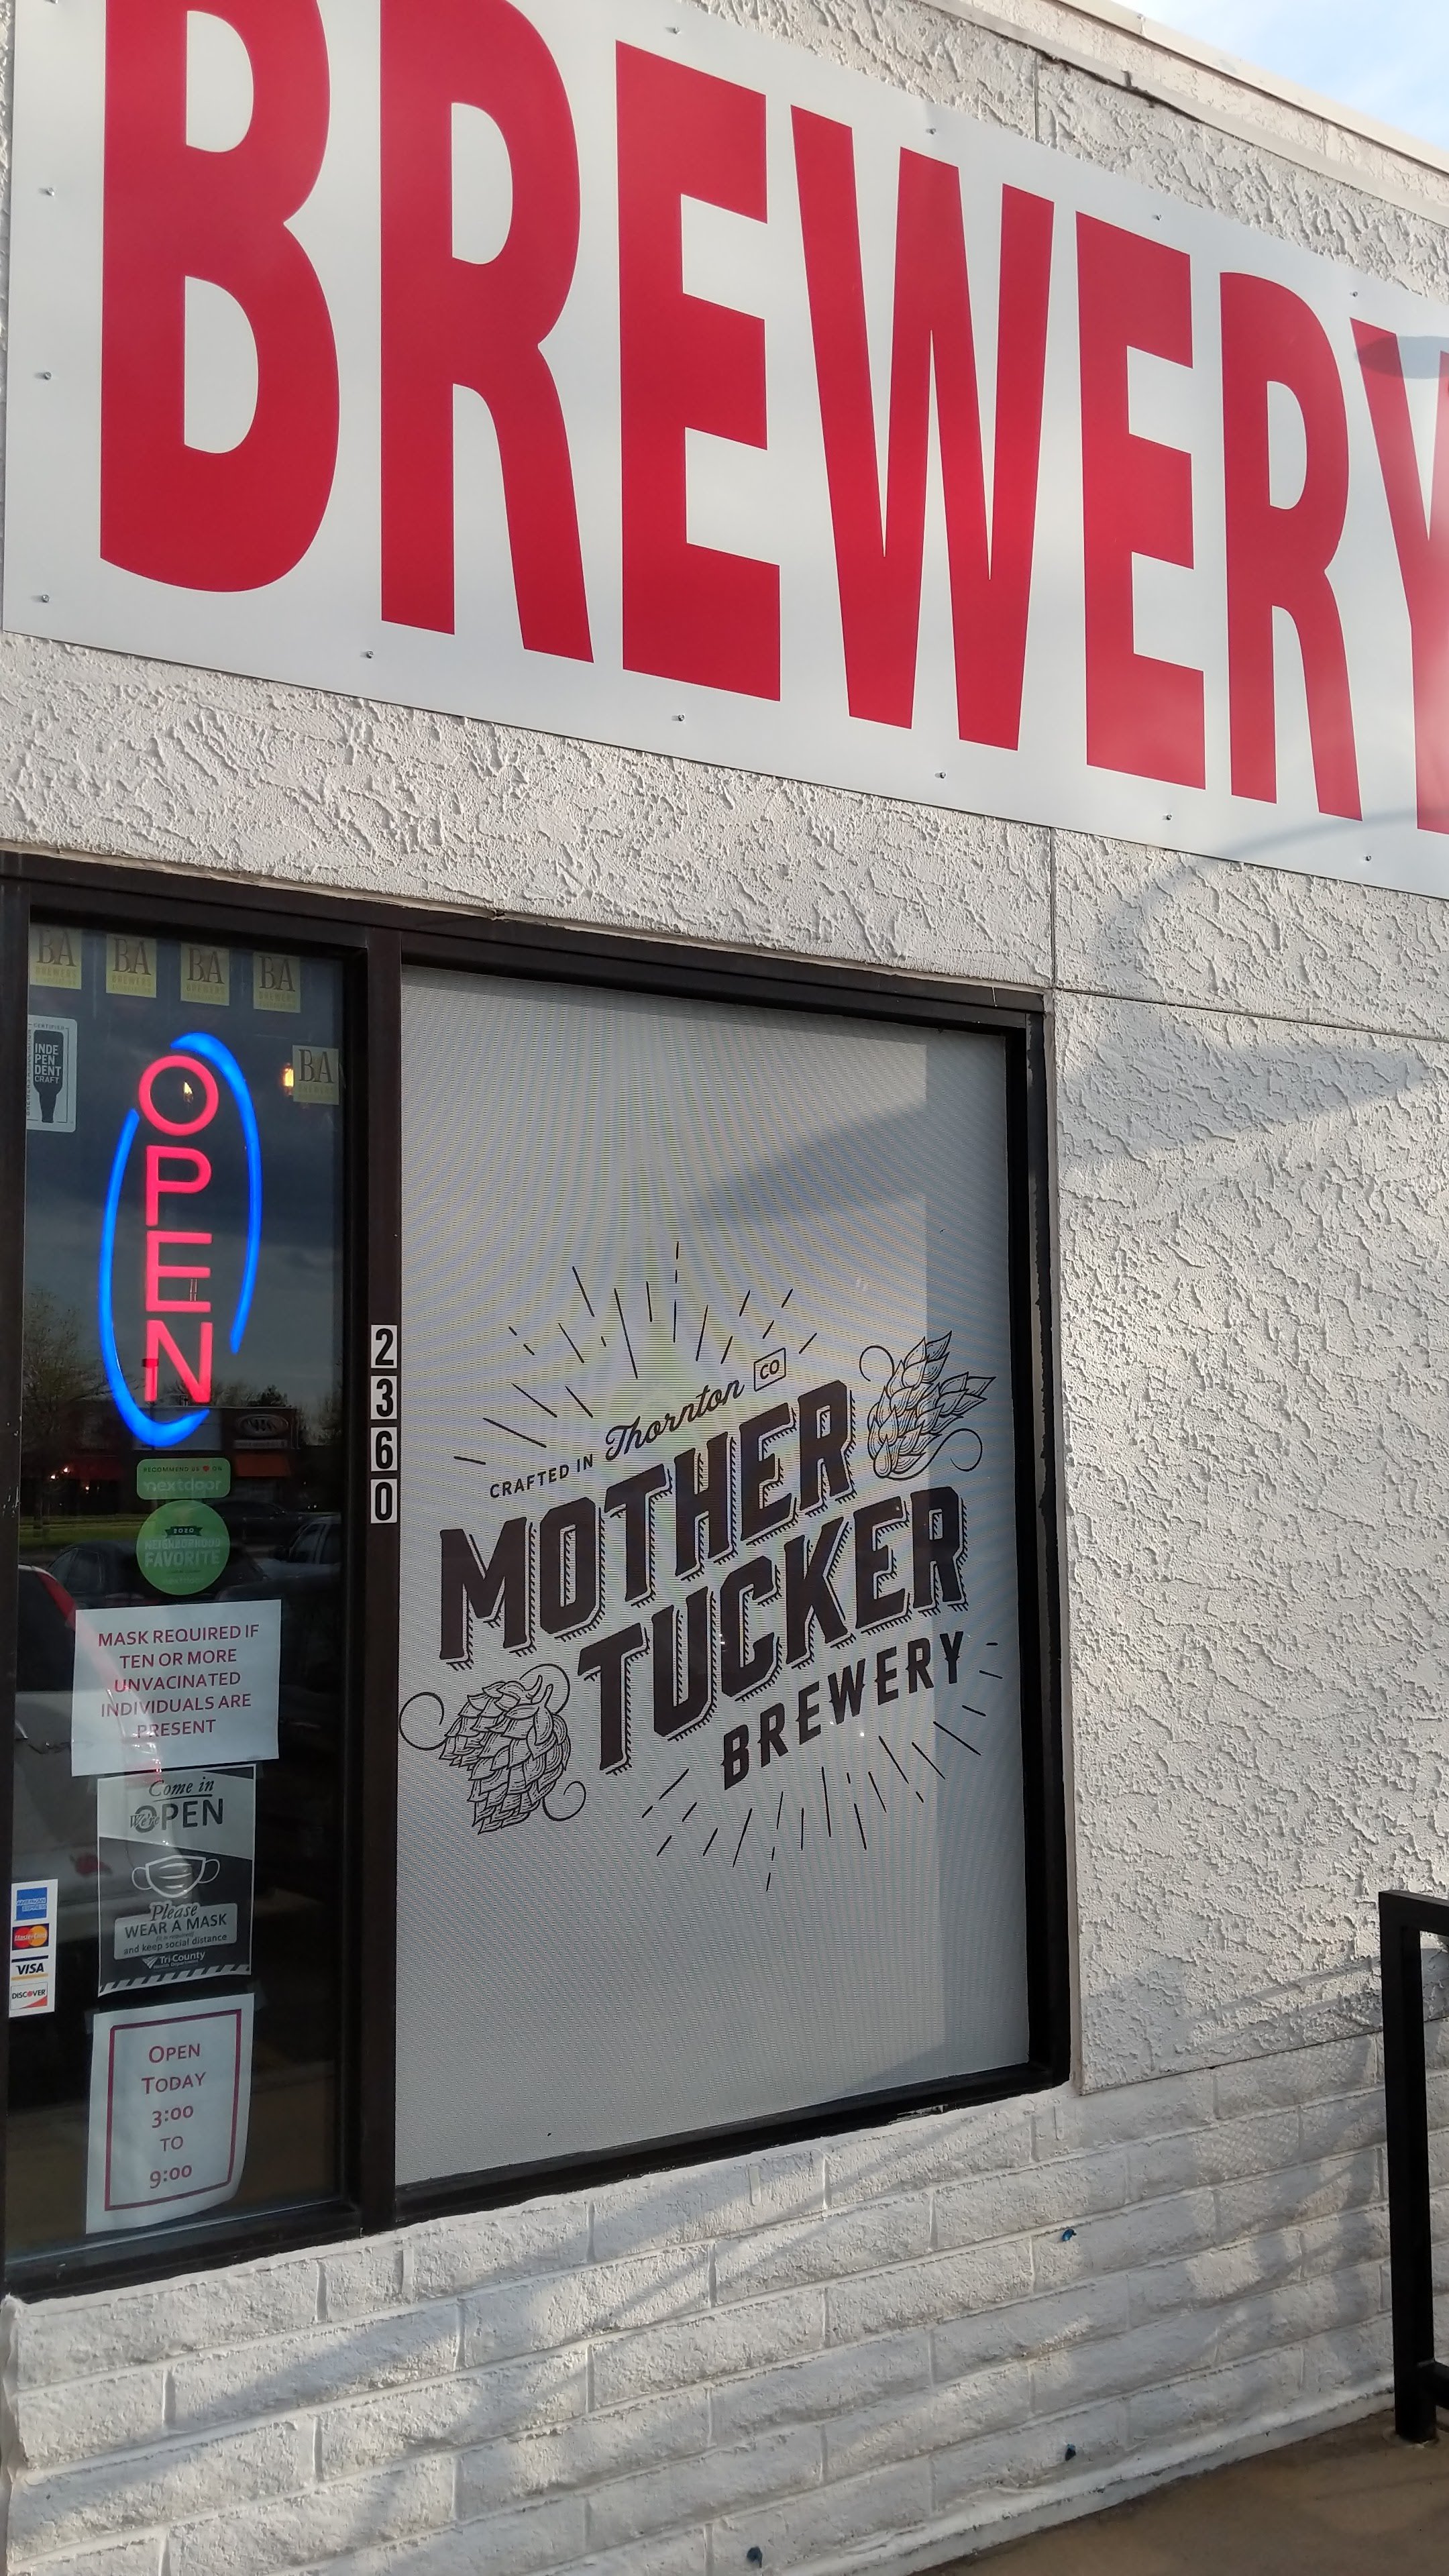 Mother Tucker Brewery in Thornton, Colorado